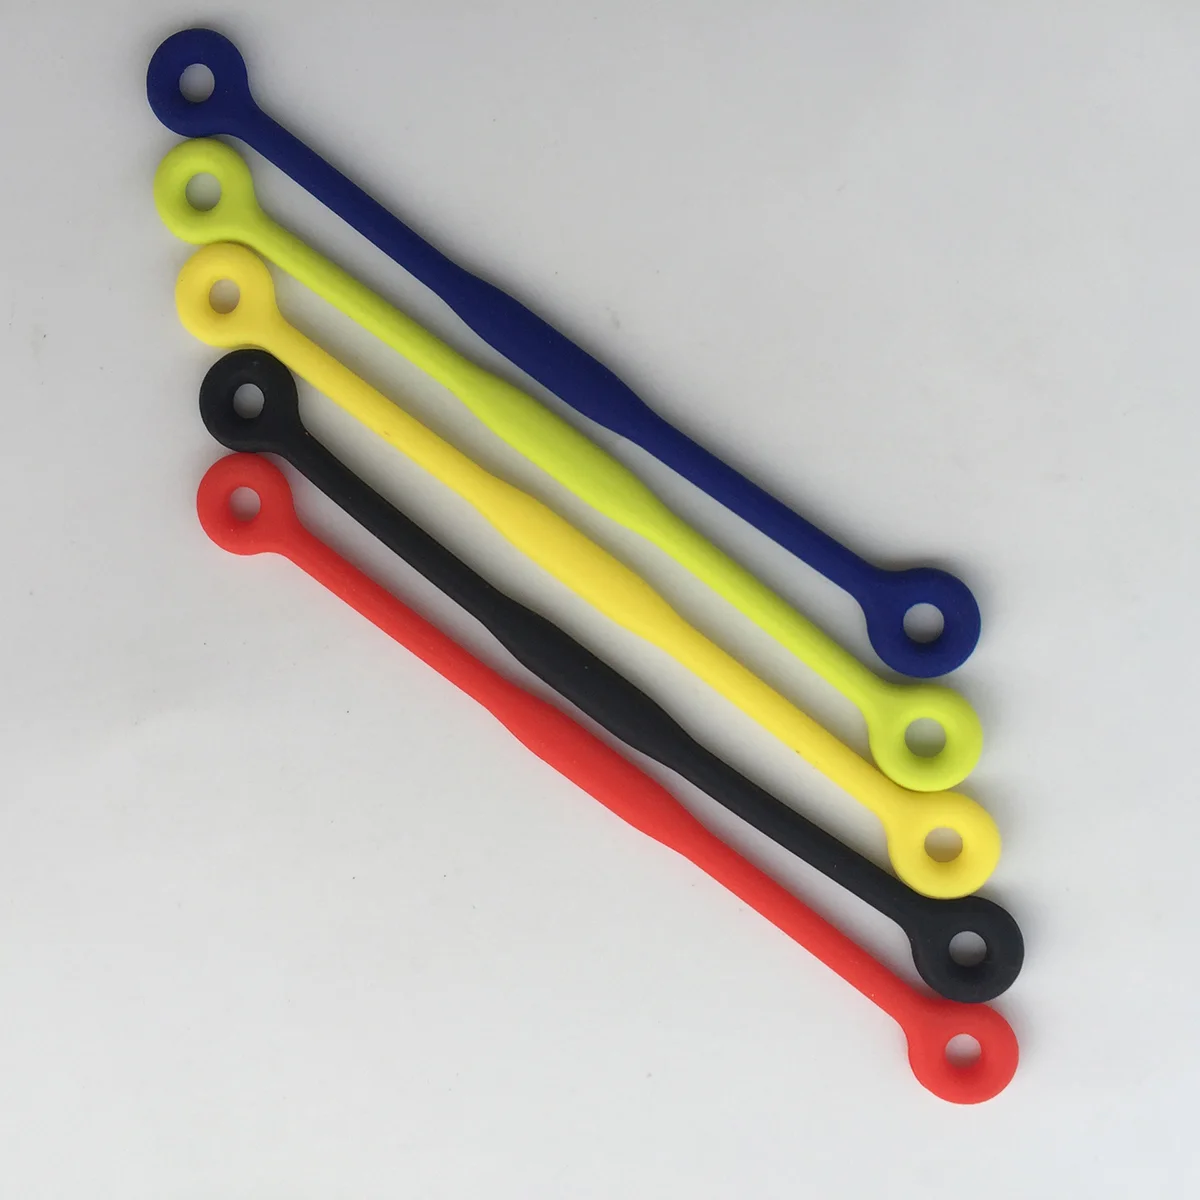 

8pcs Long Tennis Racquet Vibration Dampener Classic Long Tennis Racket Silicone (Red+Blue+Yellow+Black, 2pcs for Each Color)